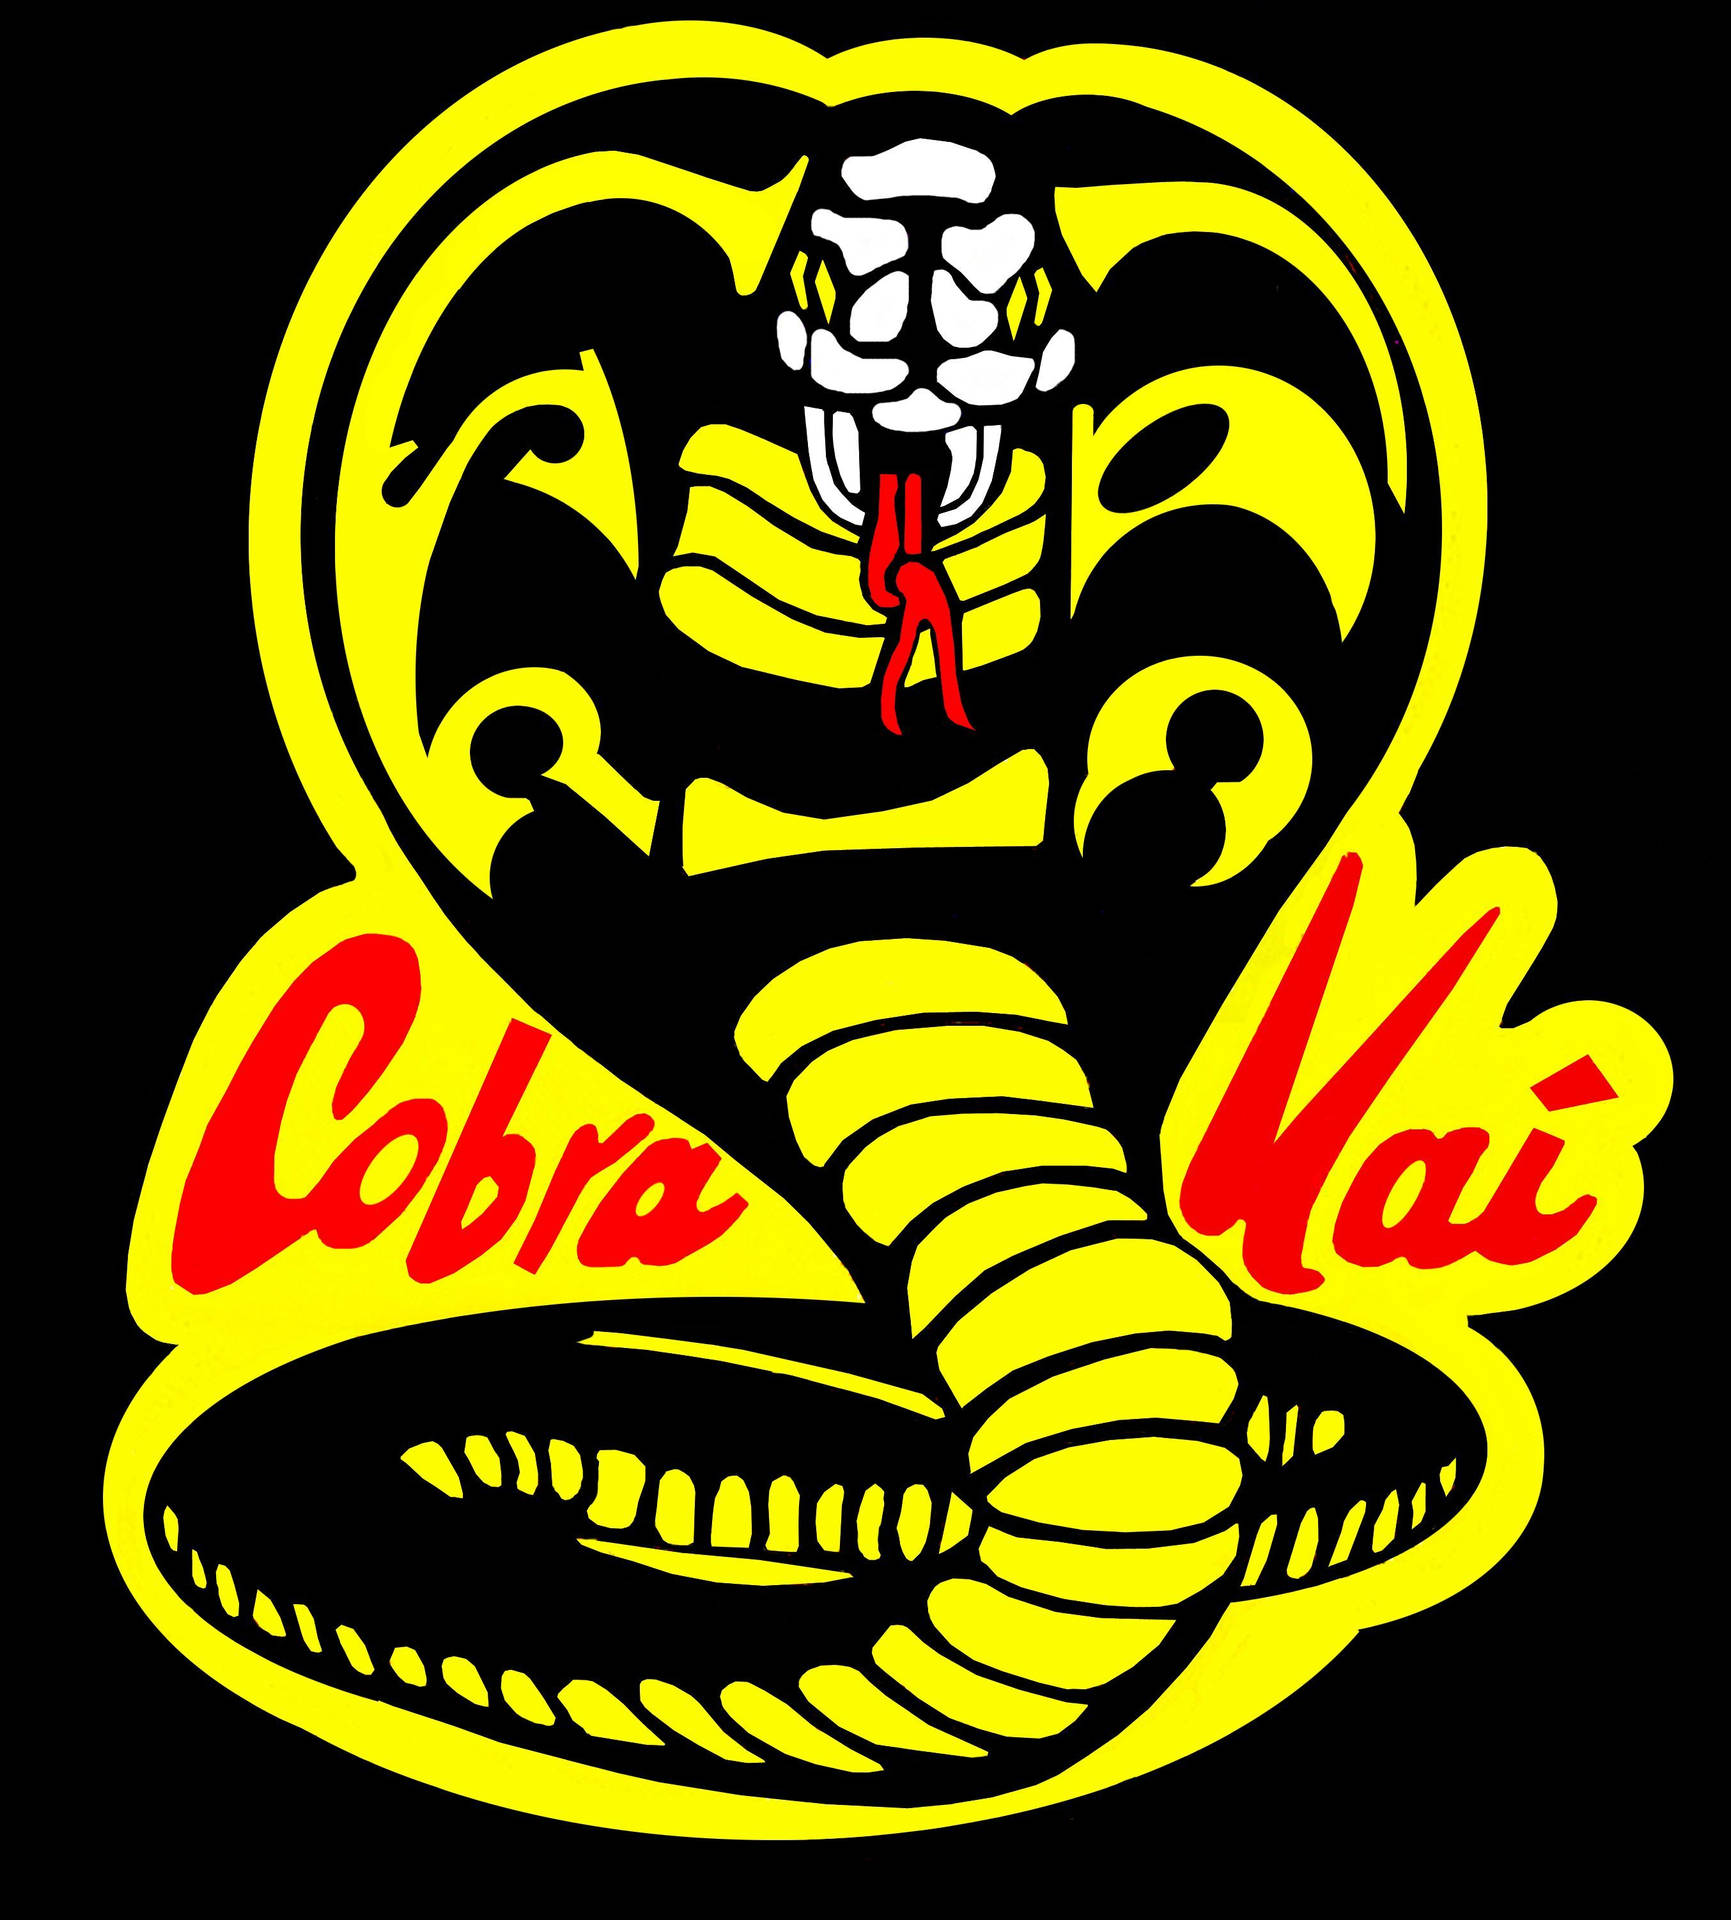 Cobra Kai 2708X3004 Wallpaper and Background Image